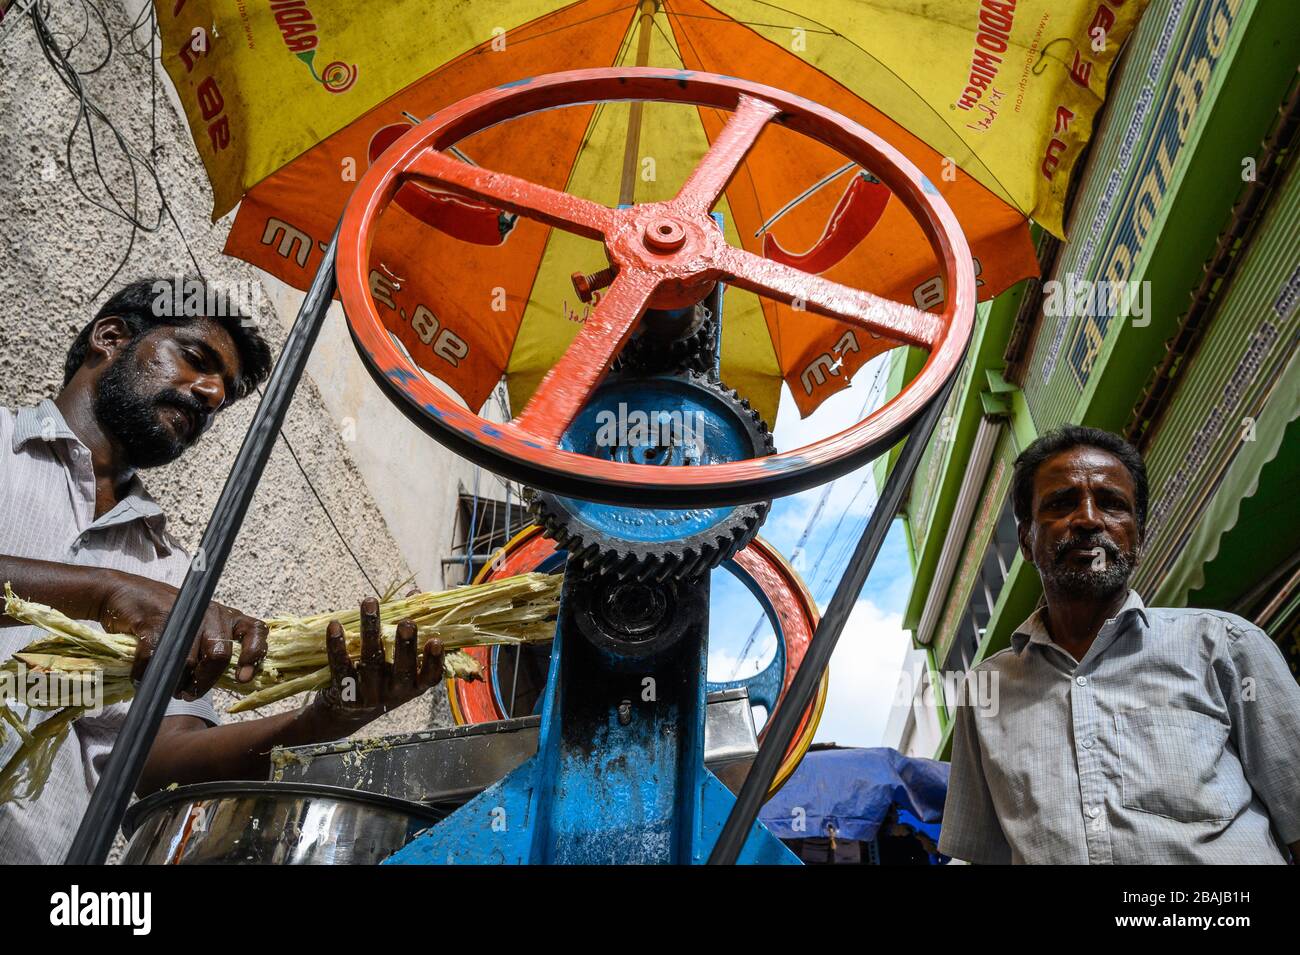 Man producing sugar-cane juice on the street in Madurai, India Stock Photo